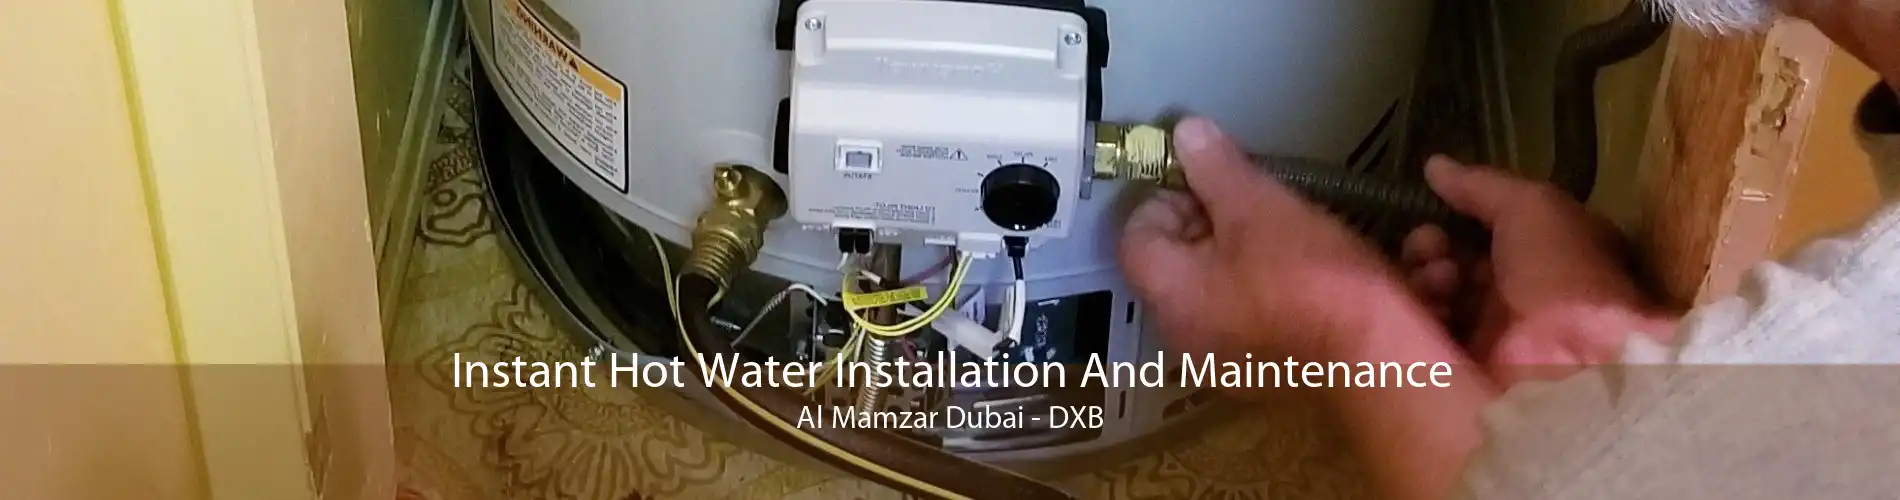 Instant Hot Water Installation And Maintenance Al Mamzar Dubai - DXB